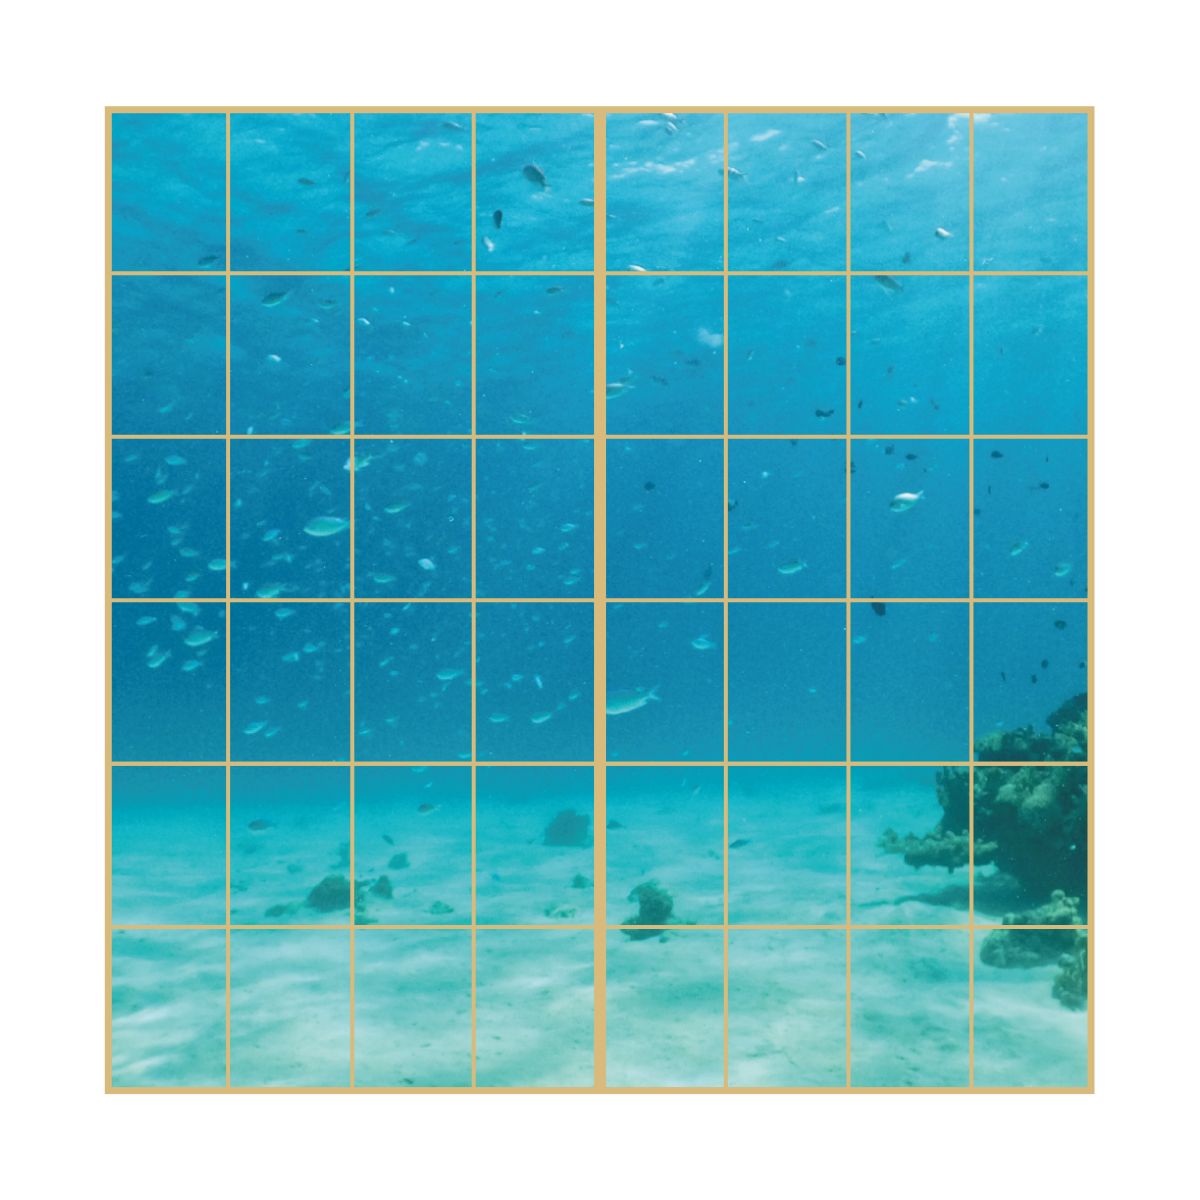 Sea Pattern Seabed Shoji Paper 92cm x 182cm 2 sheets Glue Type Asahipen Nature Sea Horizon Wave Pattern Japanese Room Western Style Modern Interior sea-05S